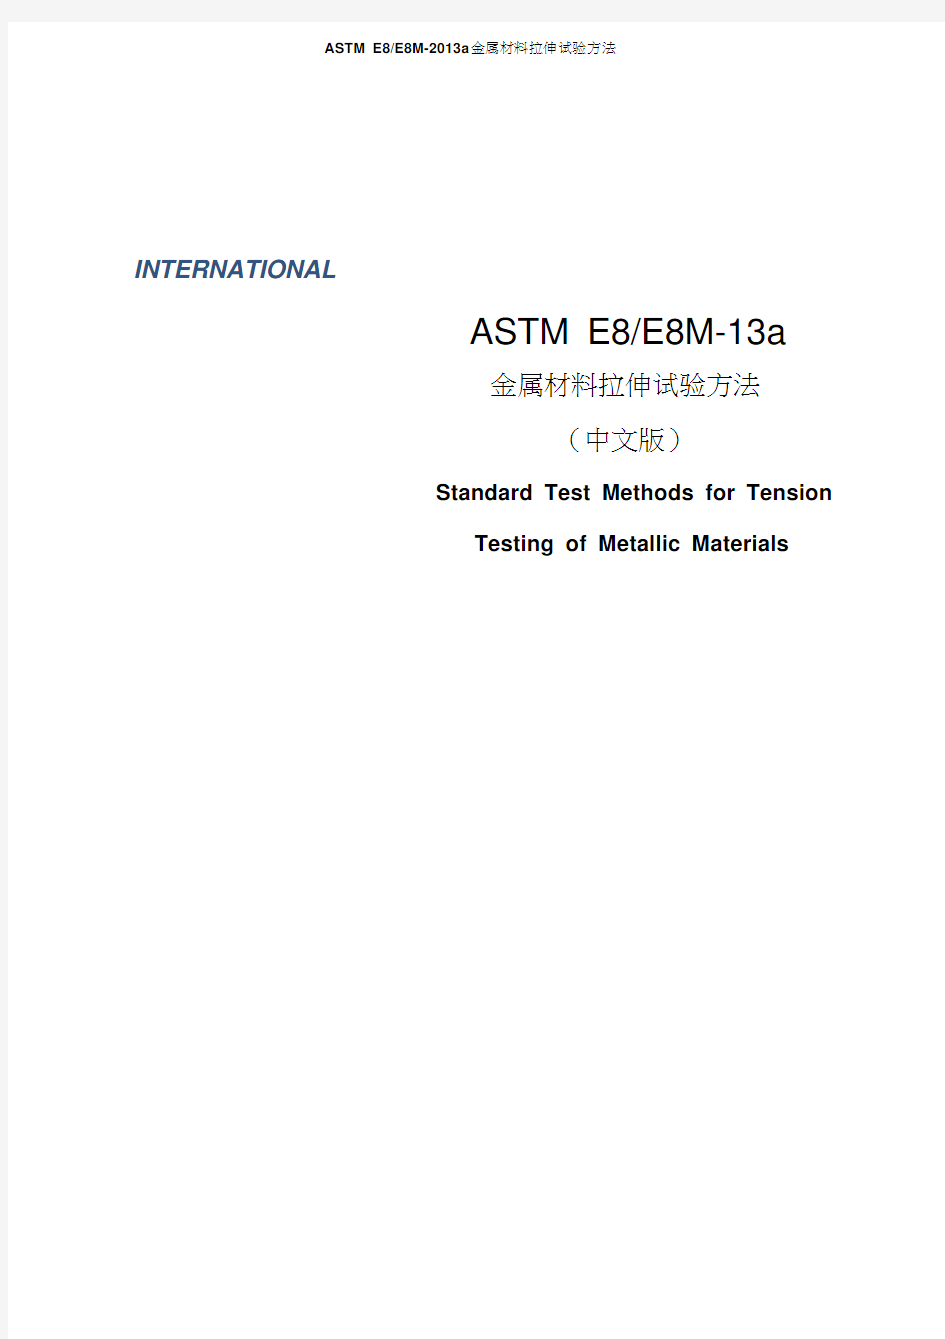 ASTM E8 E8M-2013a金属材料拉伸试验方法